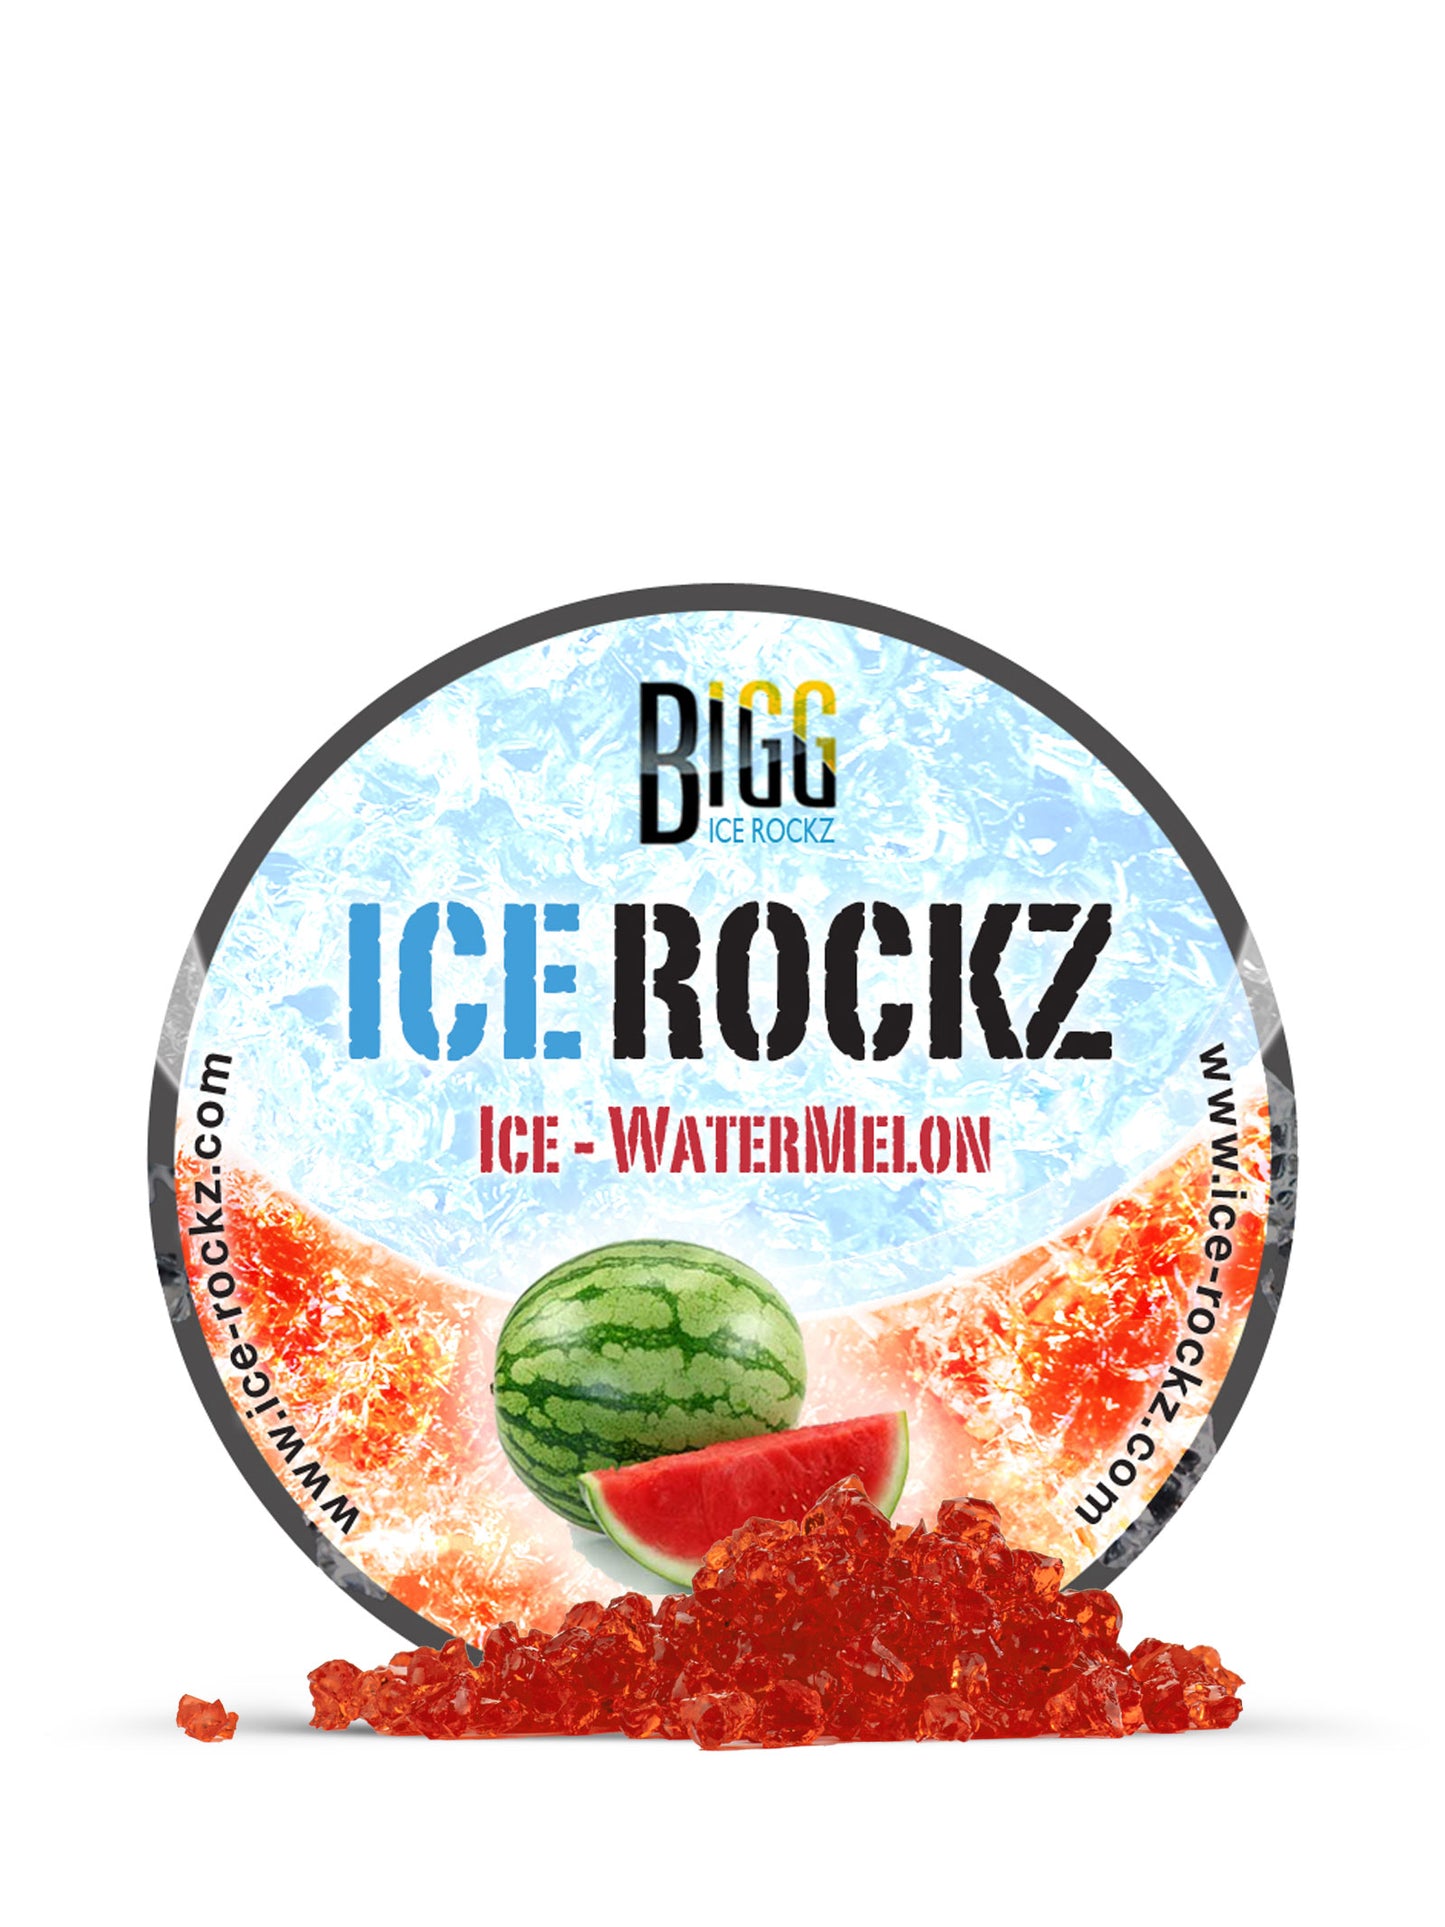 Watermelon Shisha Flavour BIGG Ice Rockz Tobacco Free 120g - The Shisha Shop